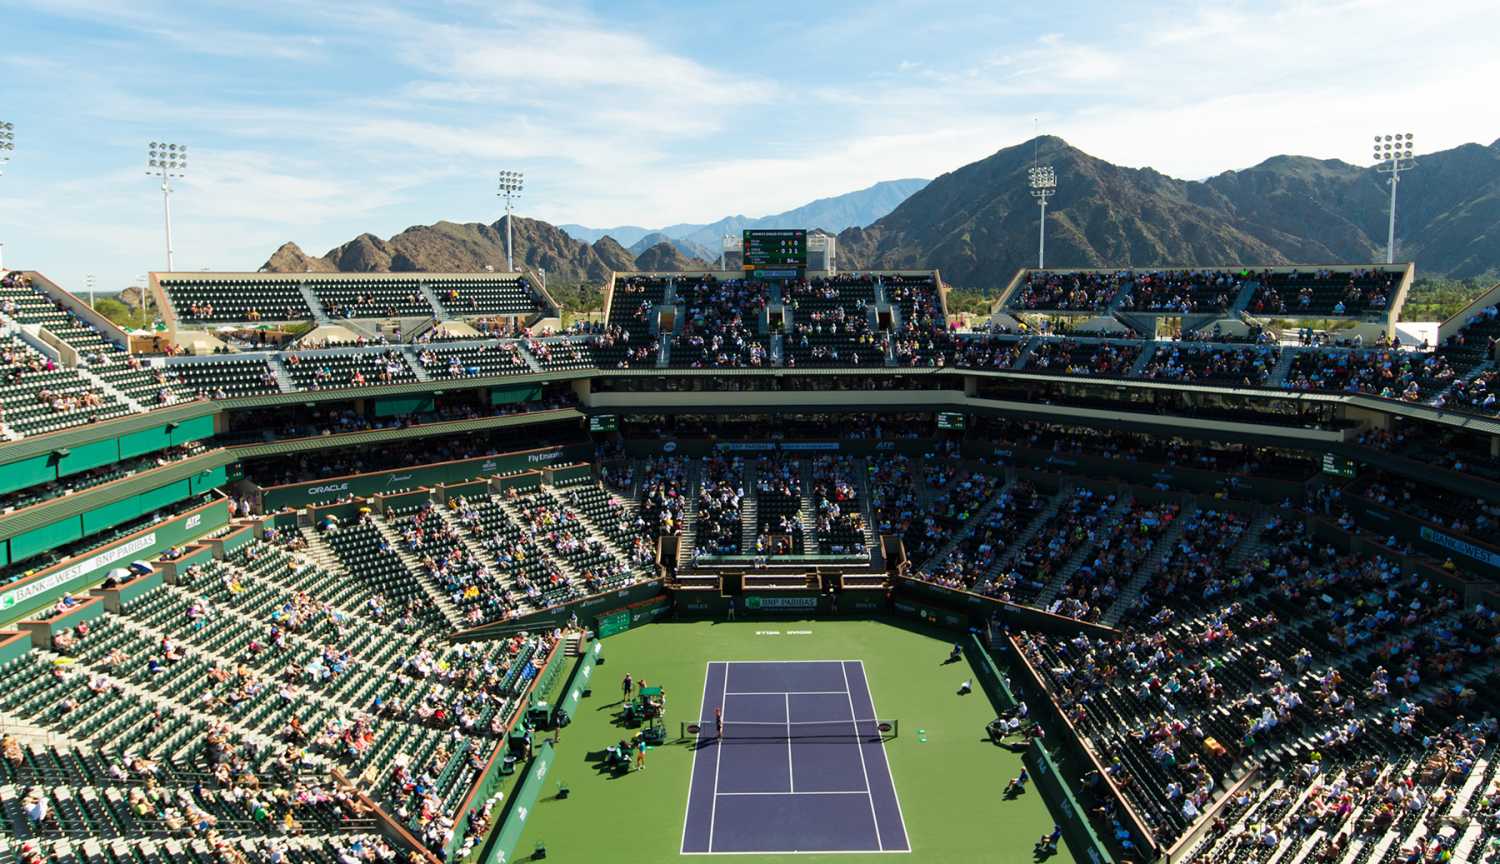 Indian Wells Tennis Garden boasts 29 regulation tennis courts